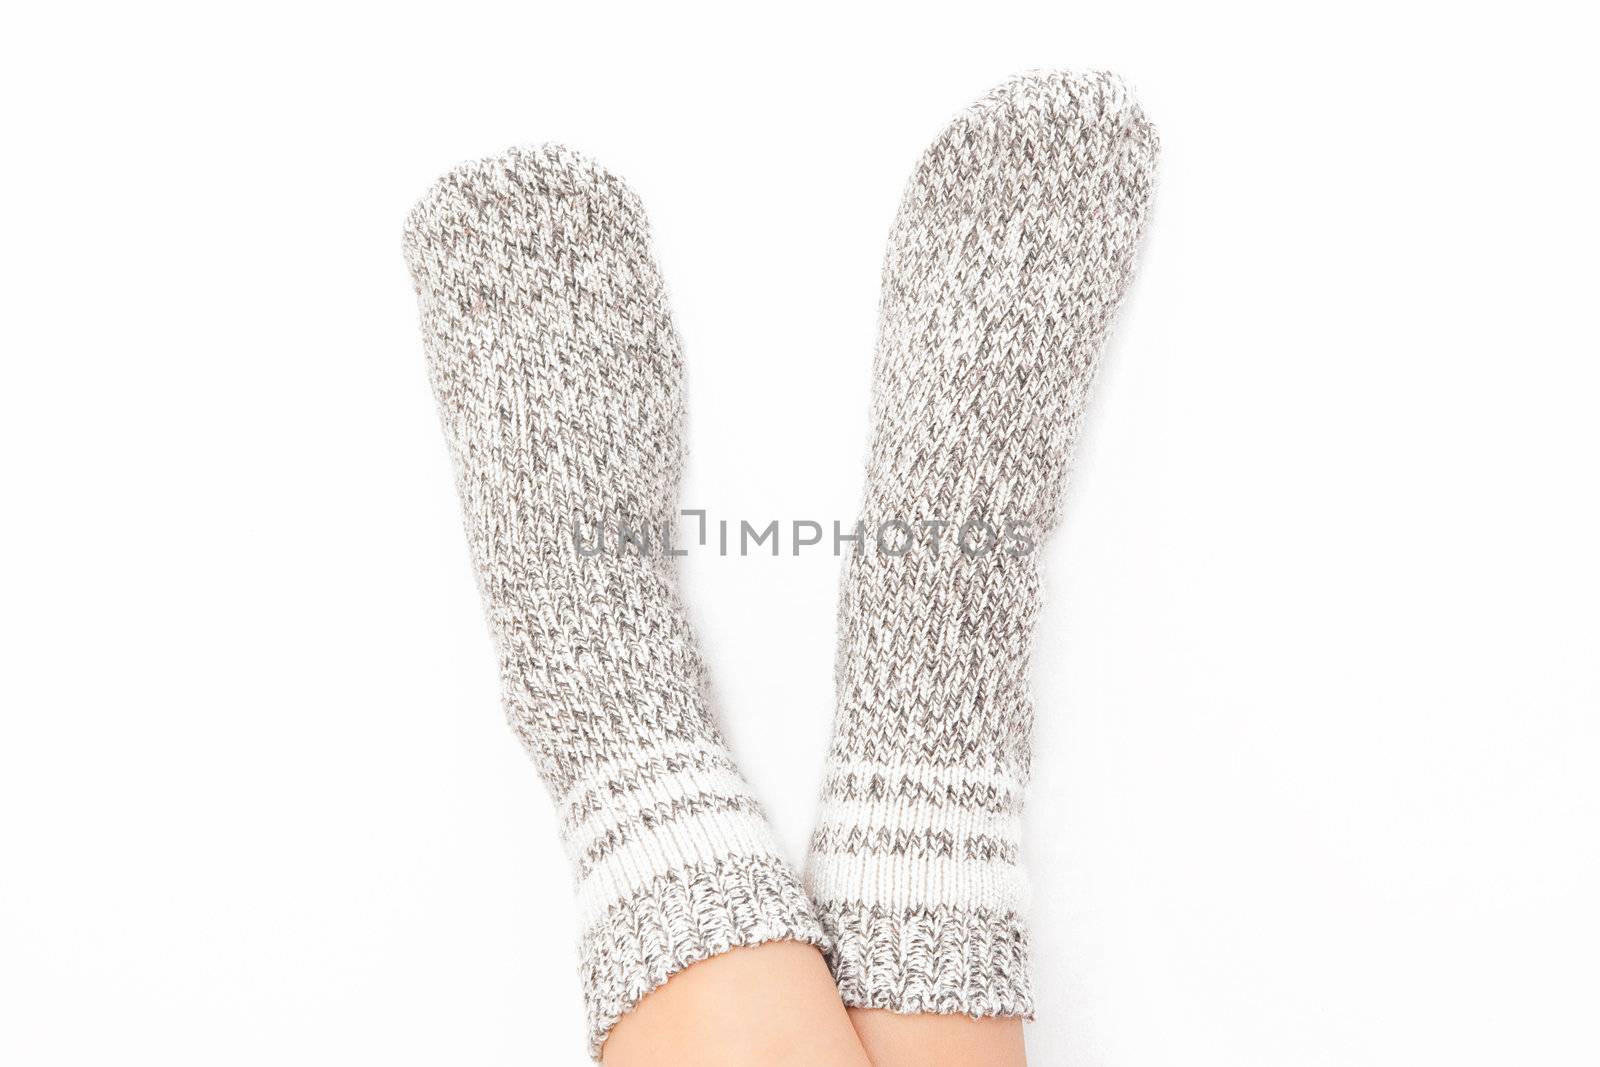 Socks made of wool